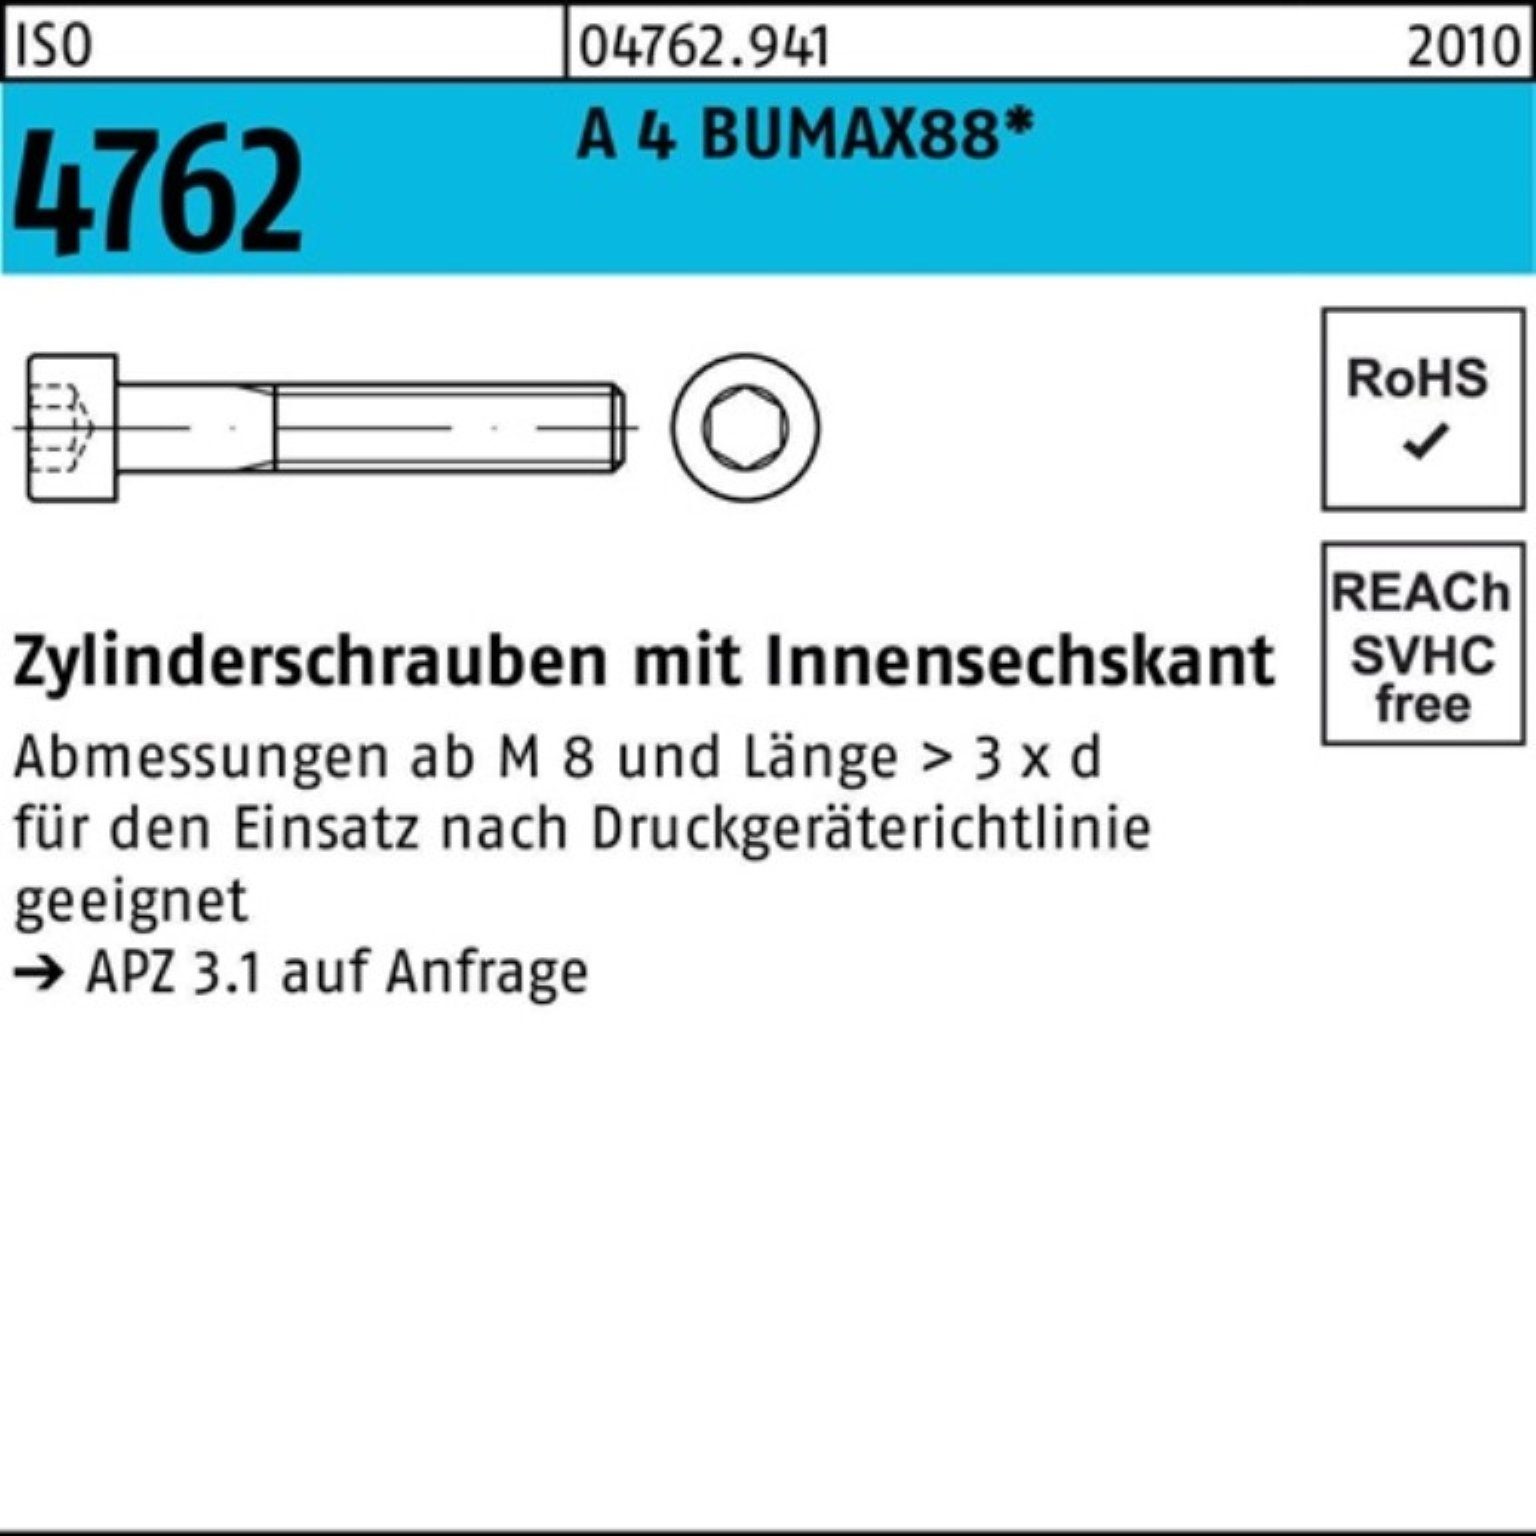 Bufab Zylinderschraube 200er M4x 12 BUMAX88 4762 200 Zylinderschraube Pack 4 A ISO Innen-6kt